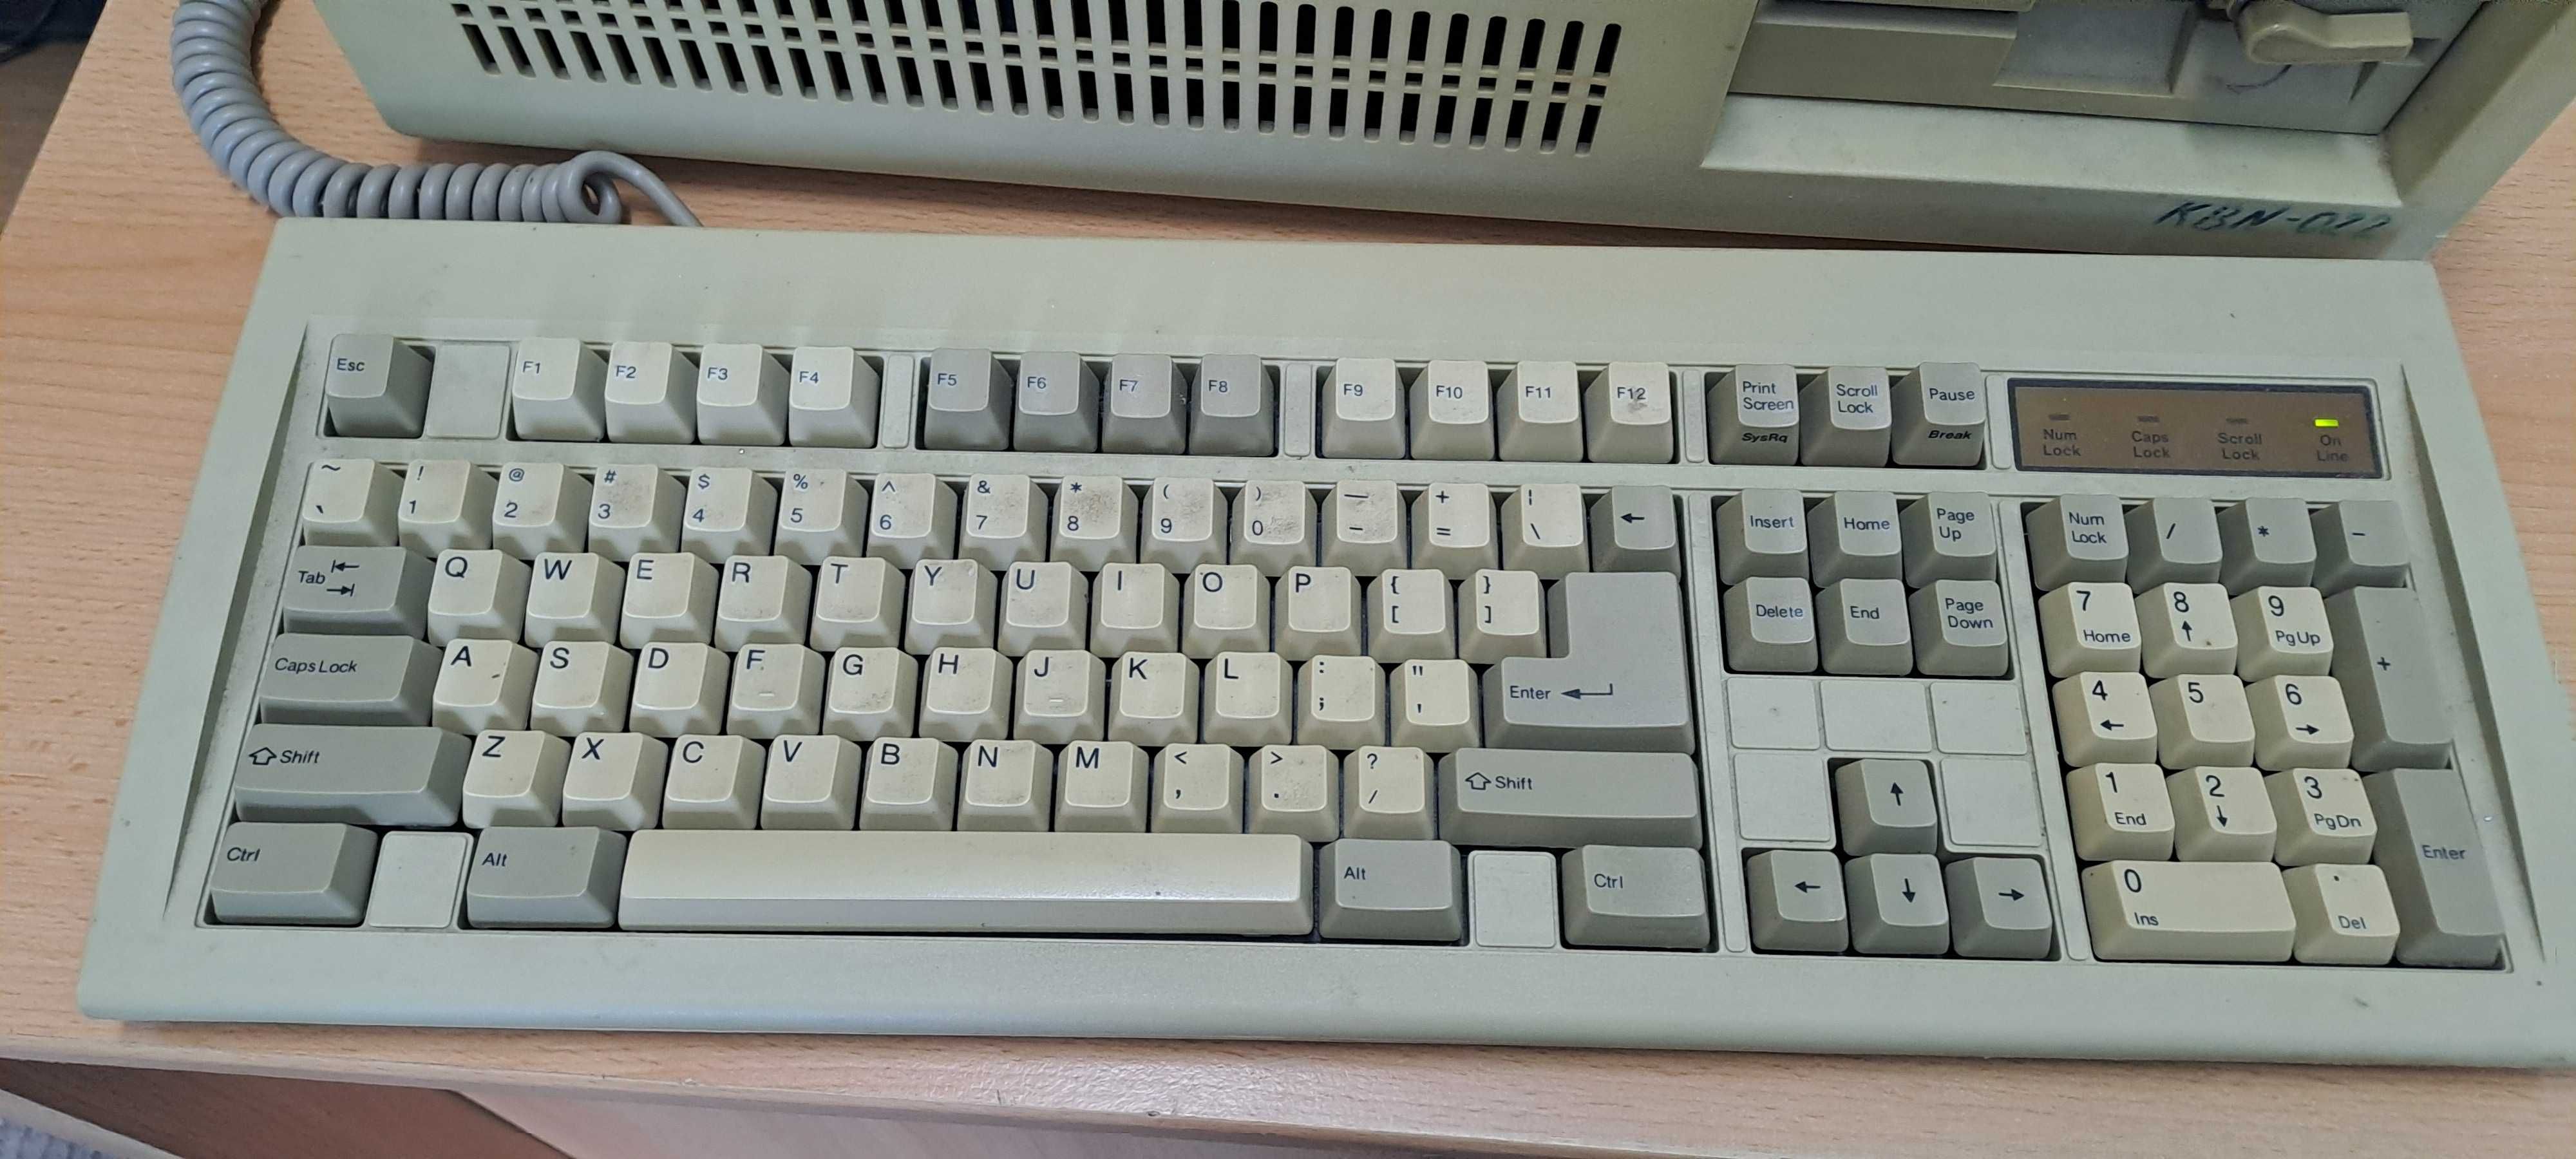 Stary komputer XT lata 80 - 100% oryginał